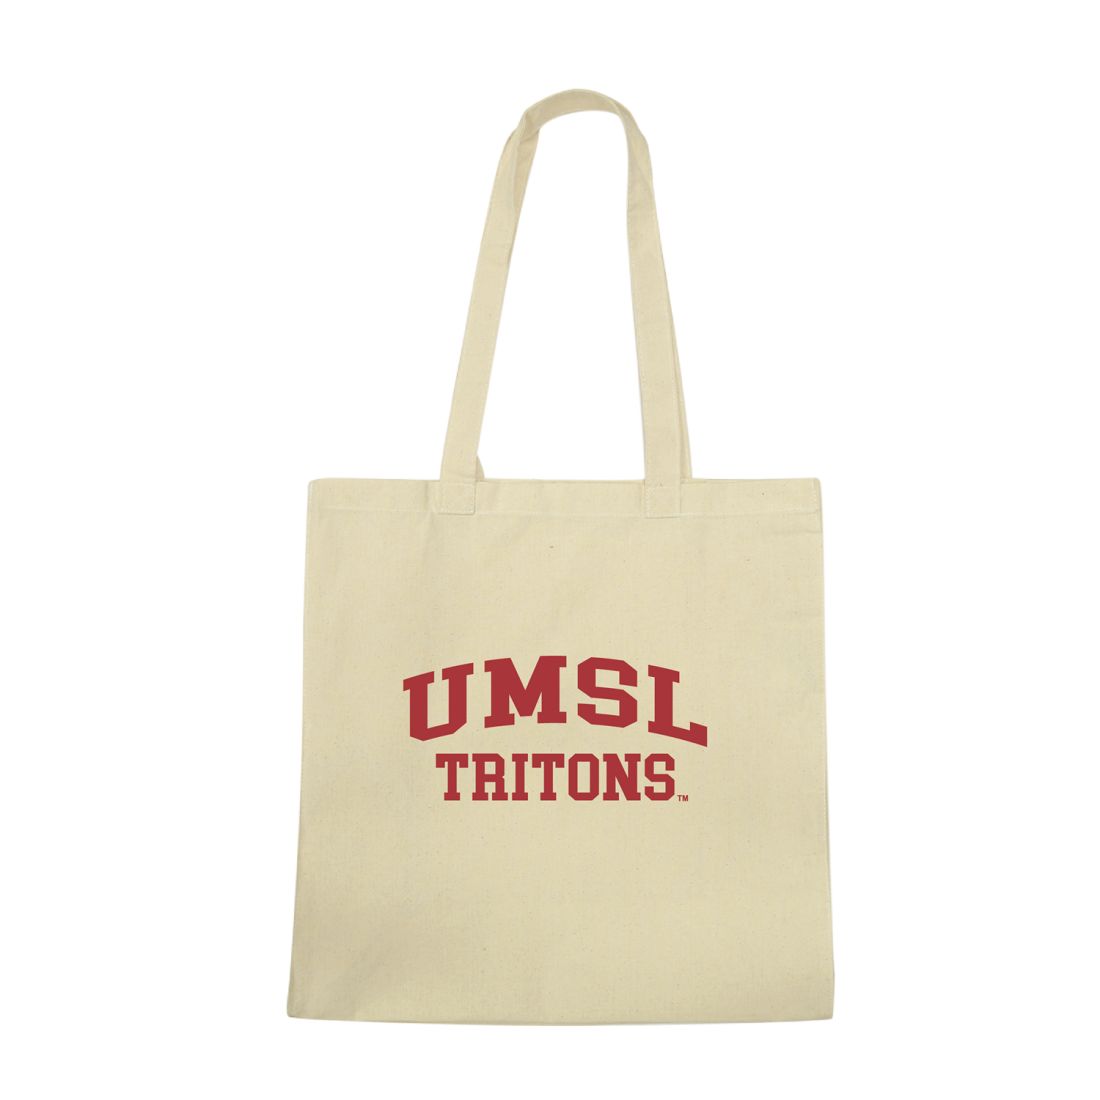 University of Missouri-Saint Louis Tritons Institutional Seal Tote Bag